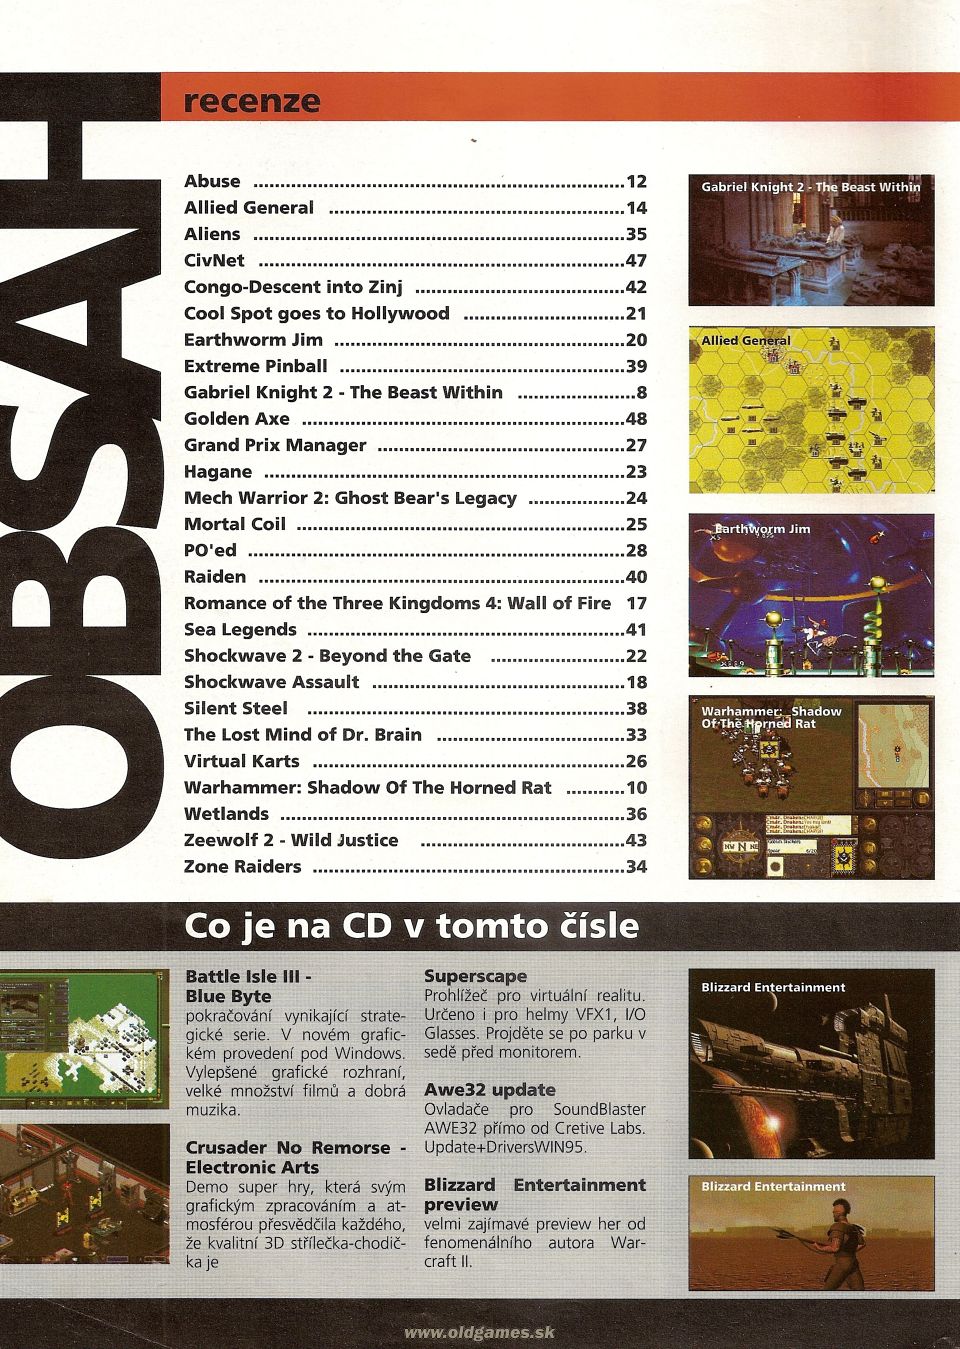 Obsah - Recenze, Level CD